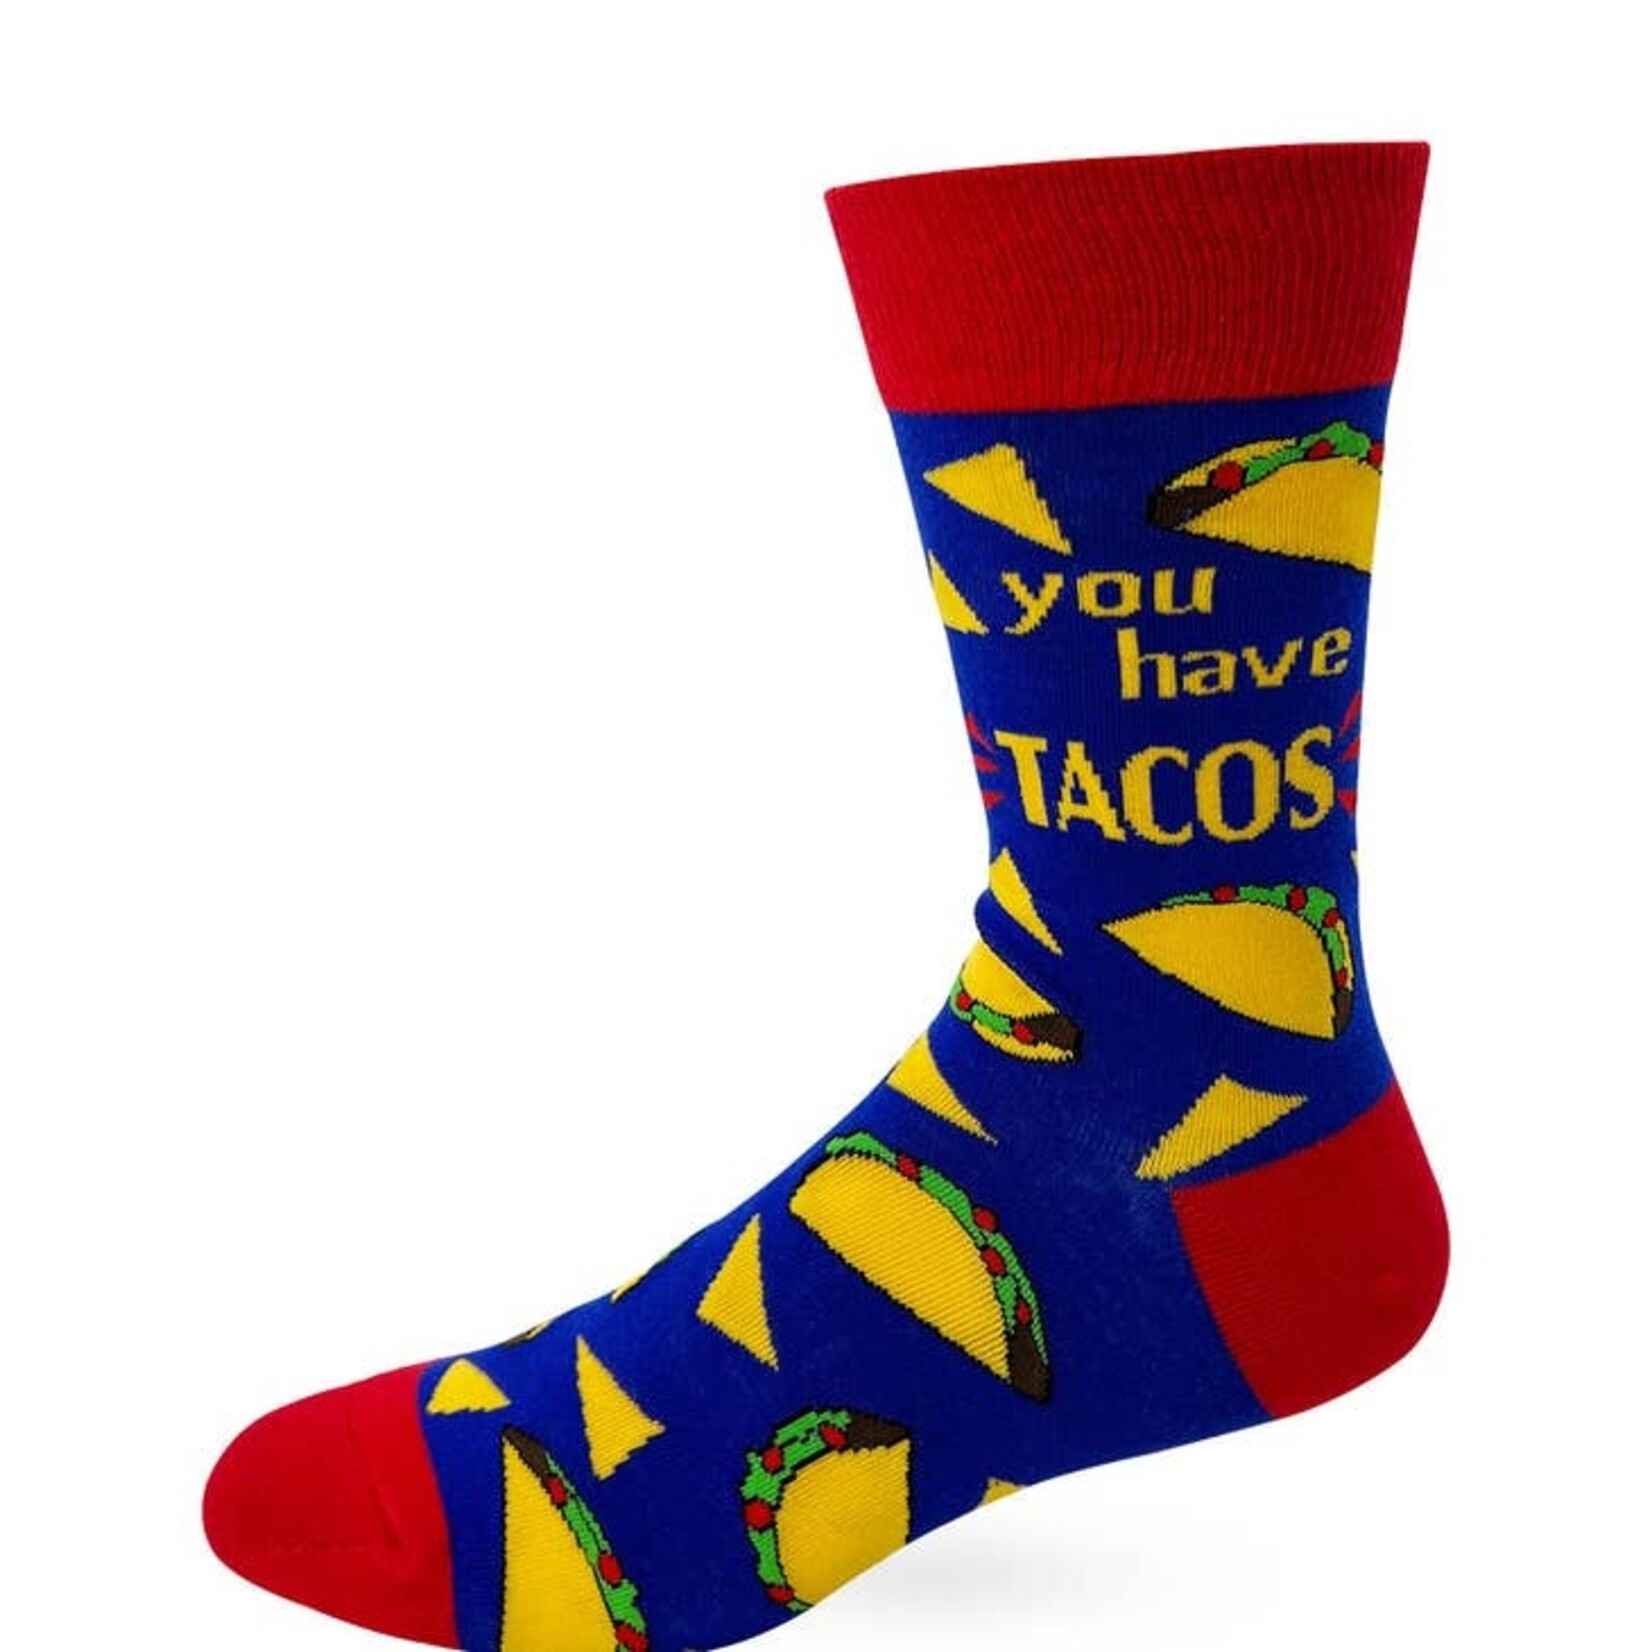 Fabdaz Fabdaz Go Away Unless You Have Tacos Men's Novelty Crew Socks